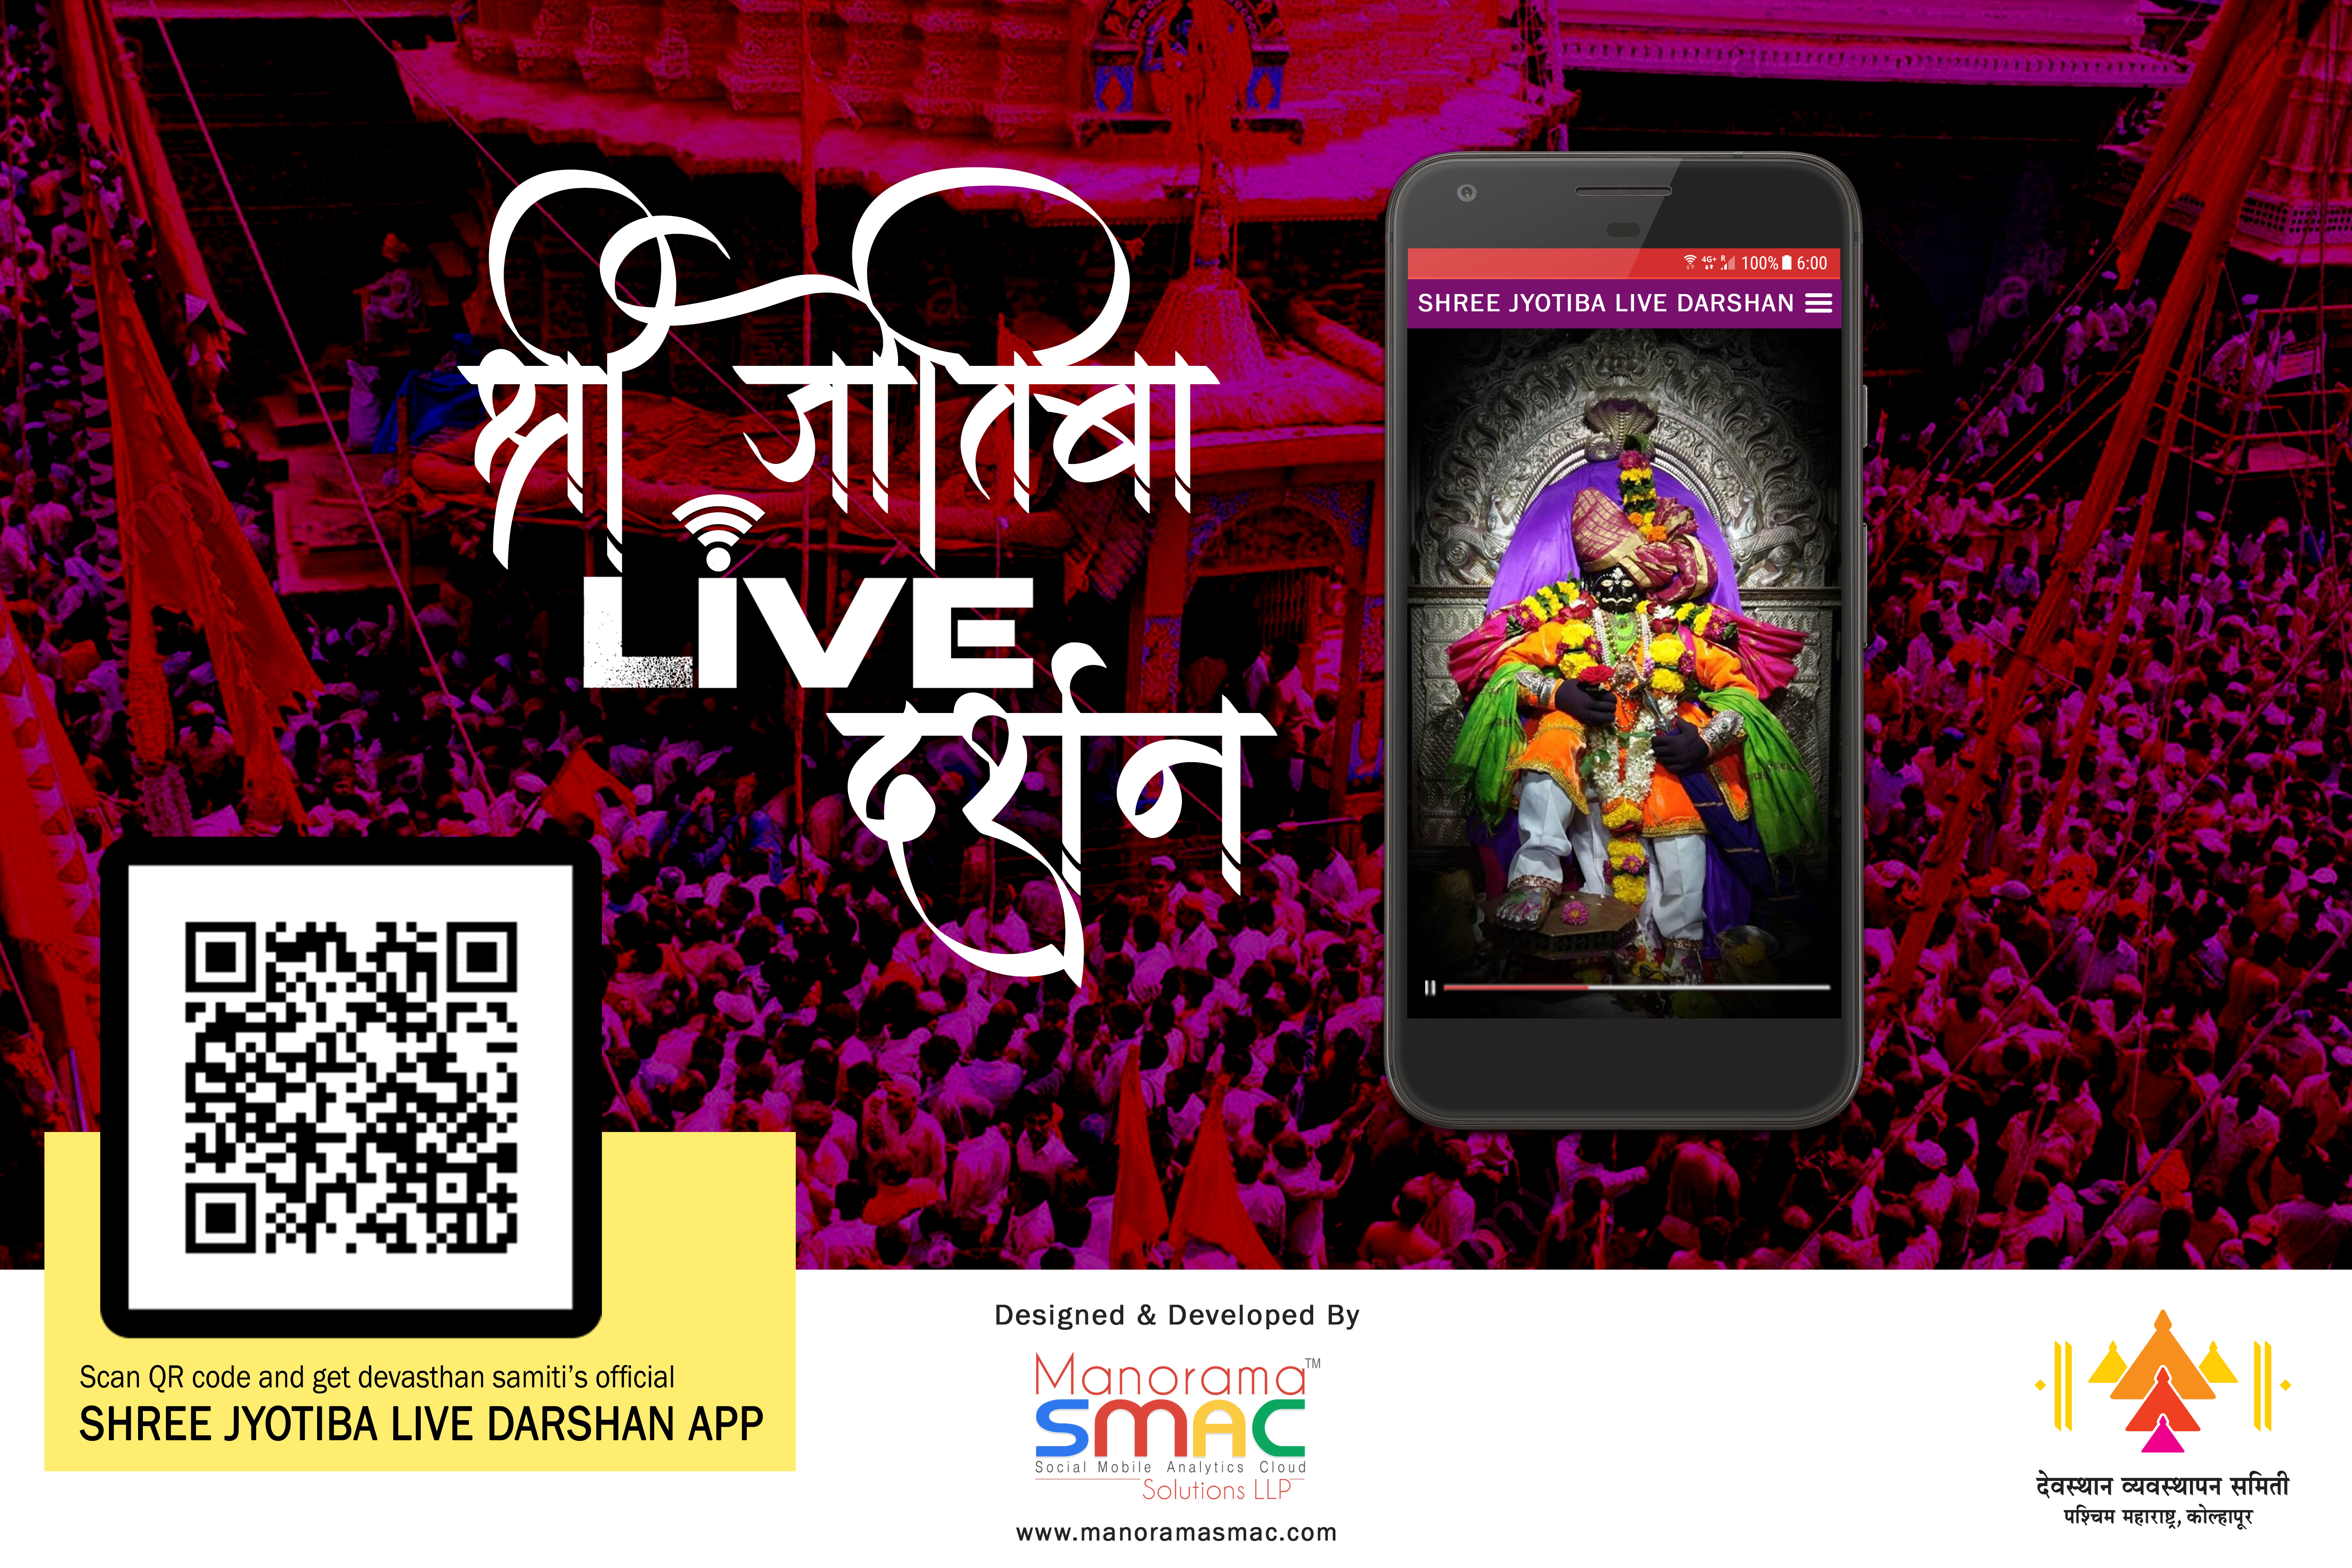 Launching of Shree Jyotiba Live Darshan Mobile App